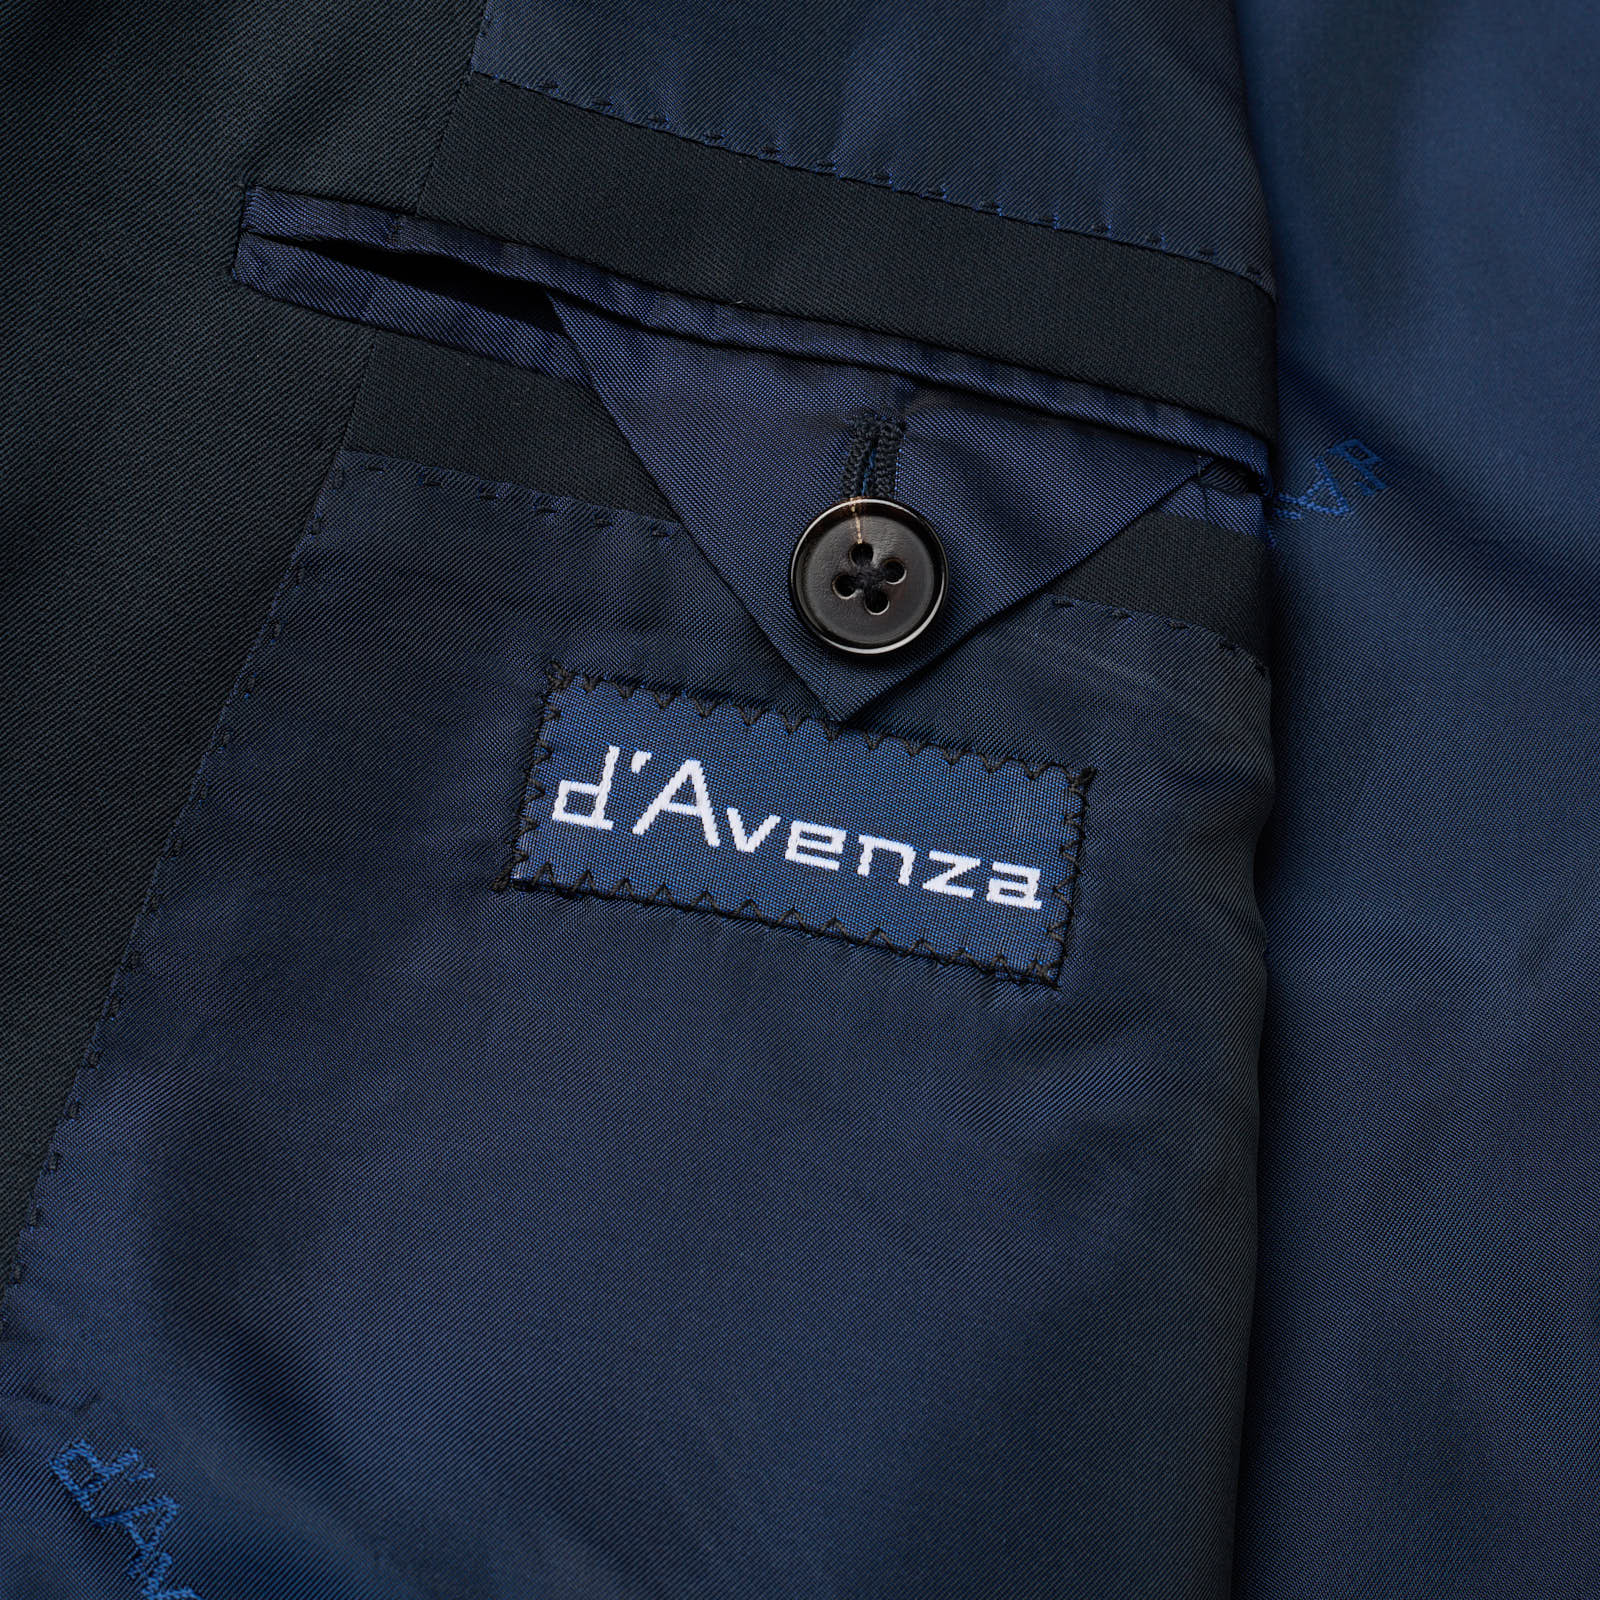 D'AVENZA x VANNUCCI Handmade Navy Blue S 180's DB Jacket Blazer EU 46 NEW US 36